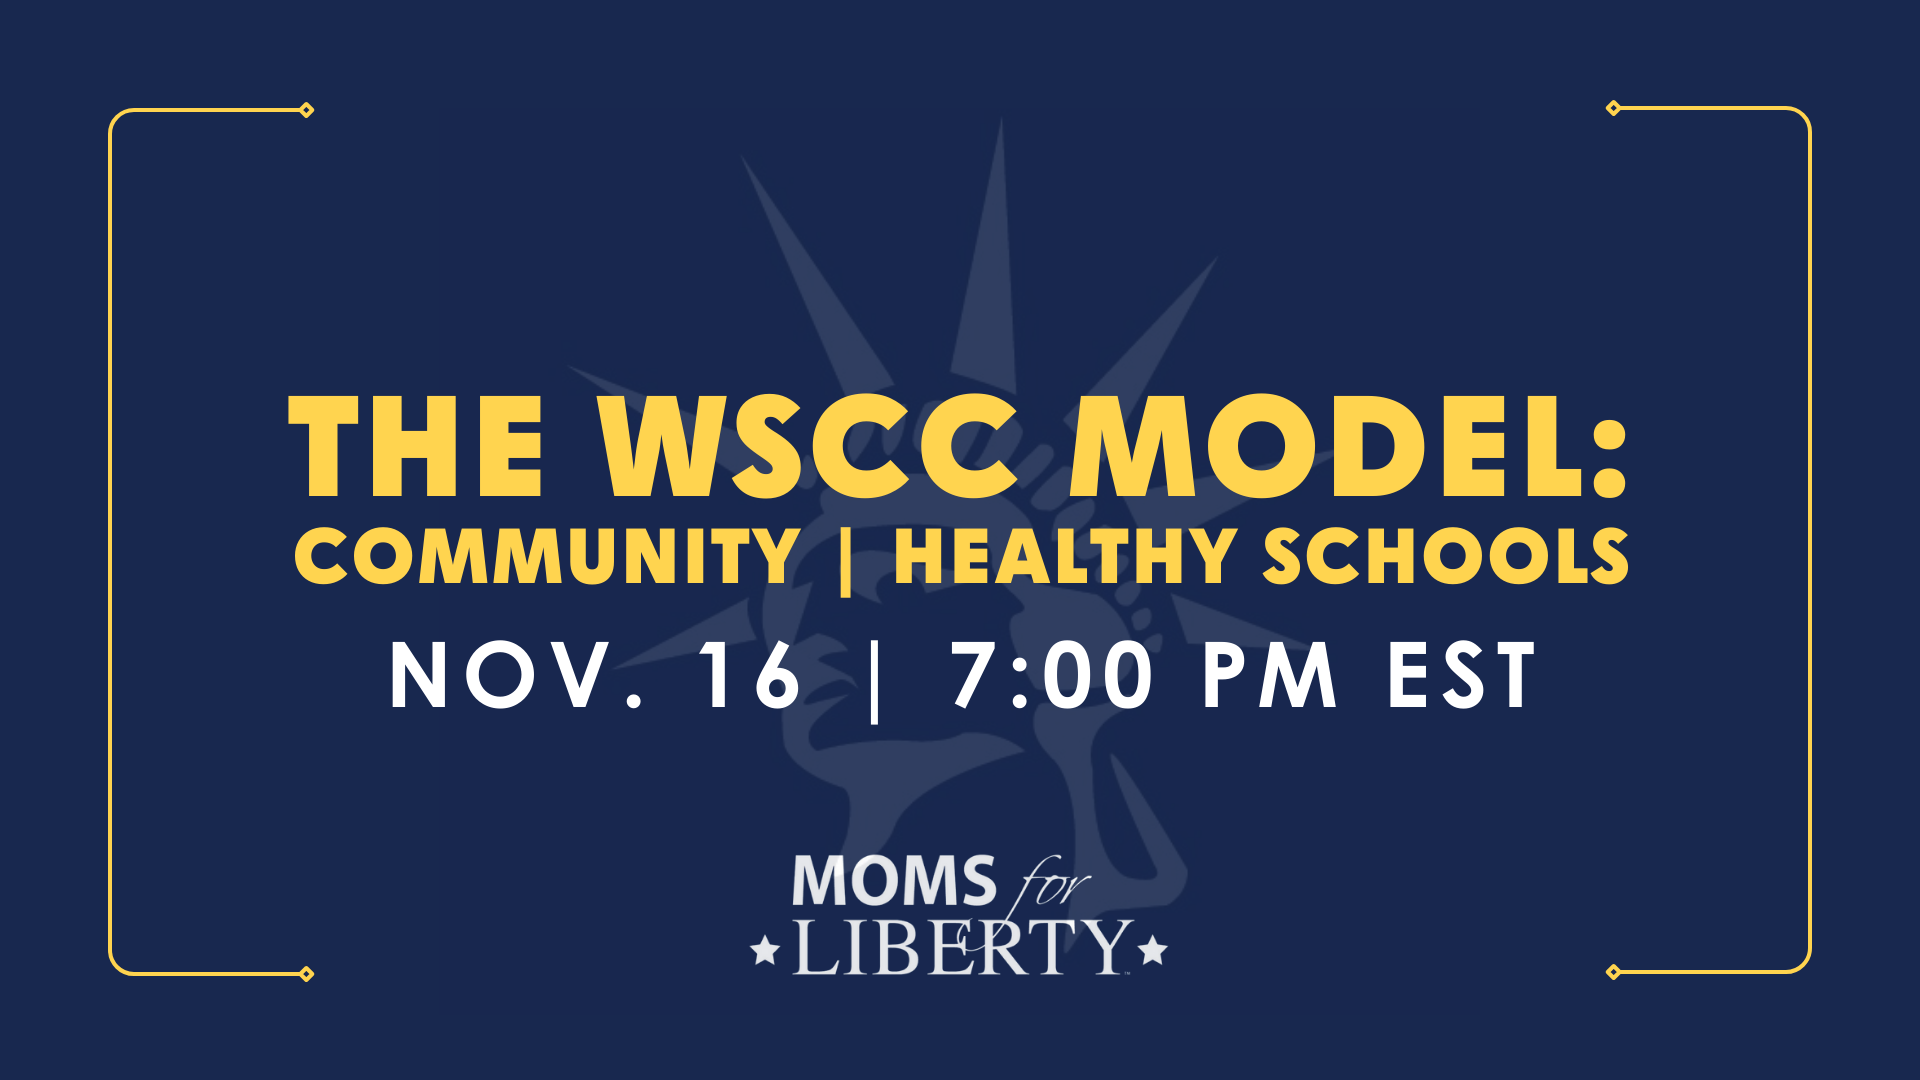 The WSCC Model: Community | Healthy Schools